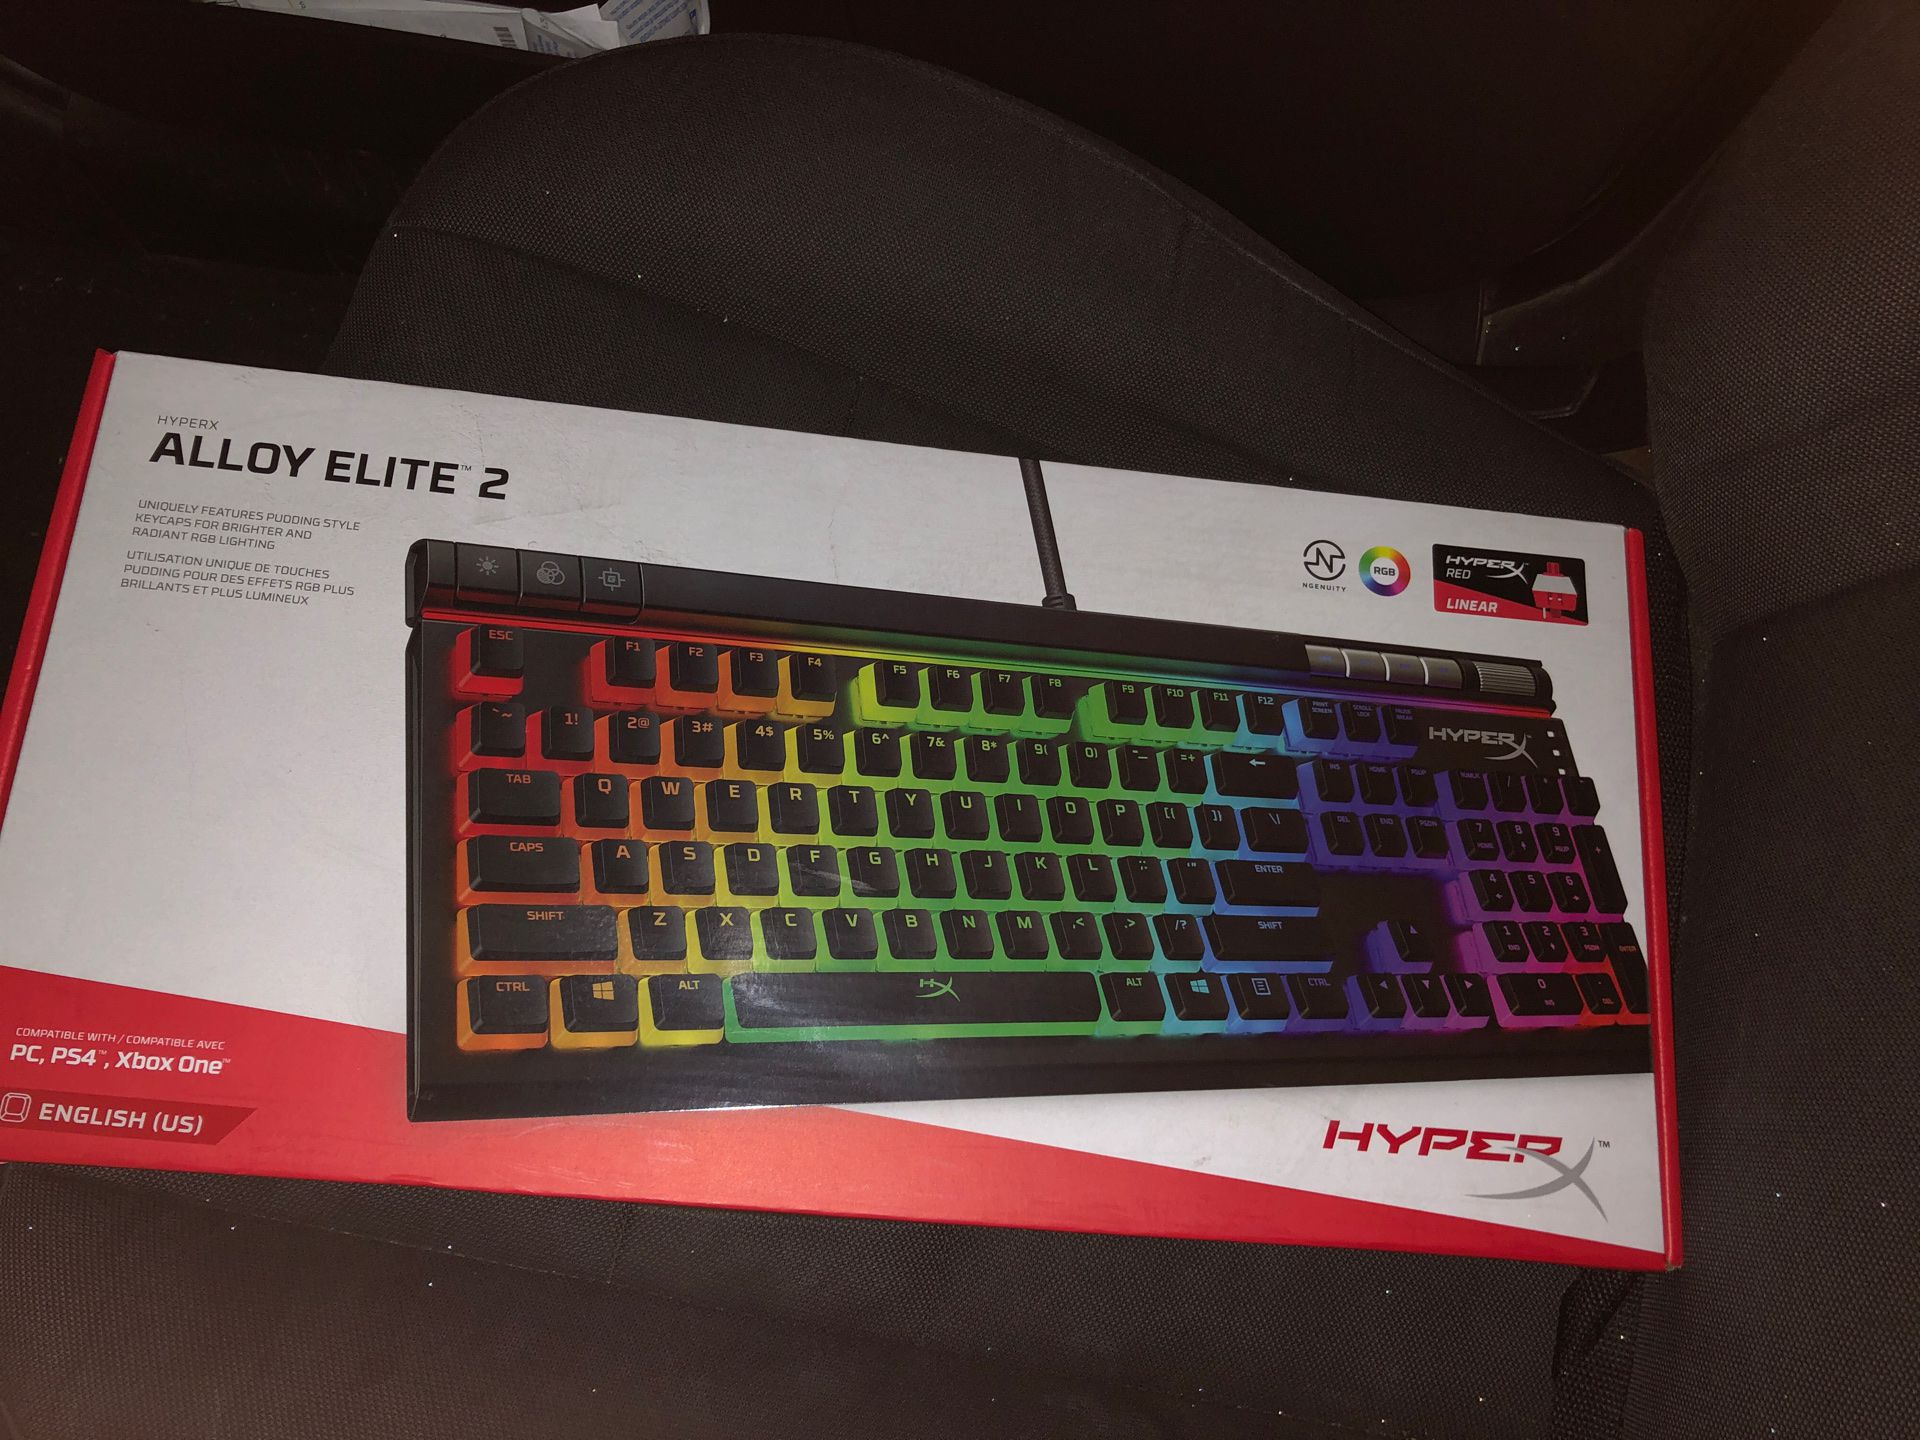 HyperX Alloy Elite 2 – Mechanical Gaming Keyboard, Software-Controlled Light & Macro Customization, ABS Pudding Keycaps, Media Controls, RGB LED Back